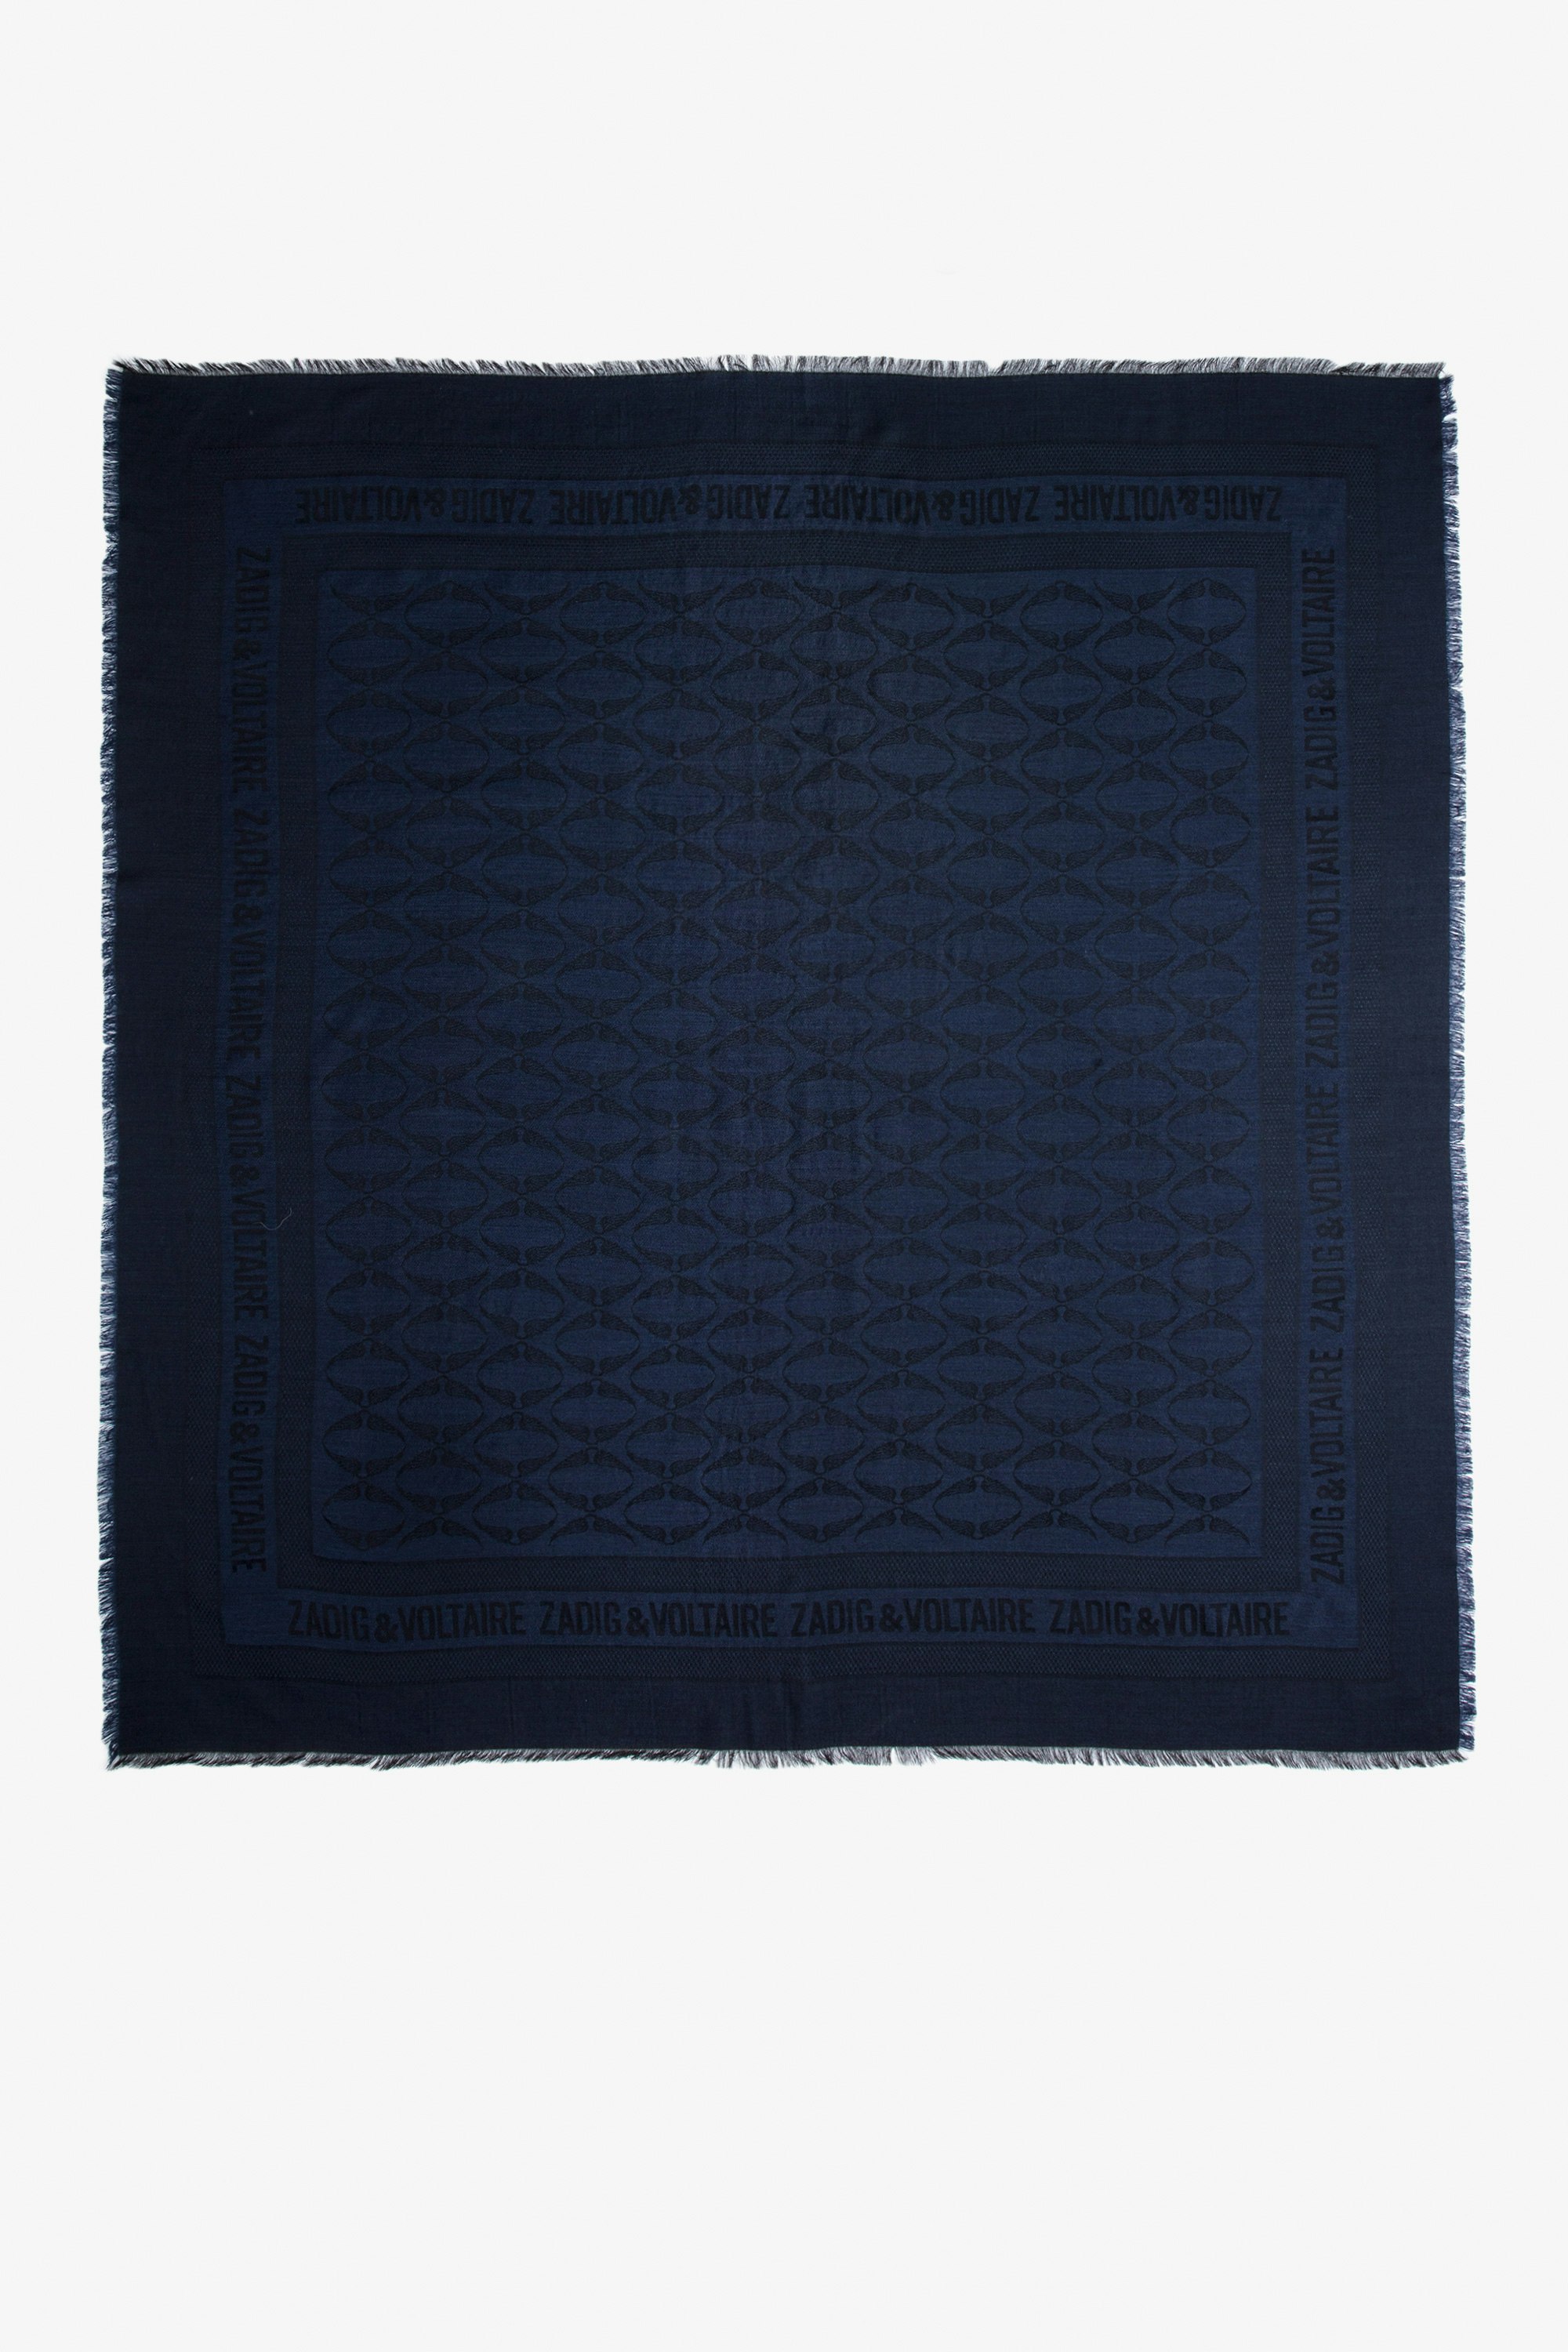 Glenn Scarf Women’s navy blue rectangular jacquard scarf.